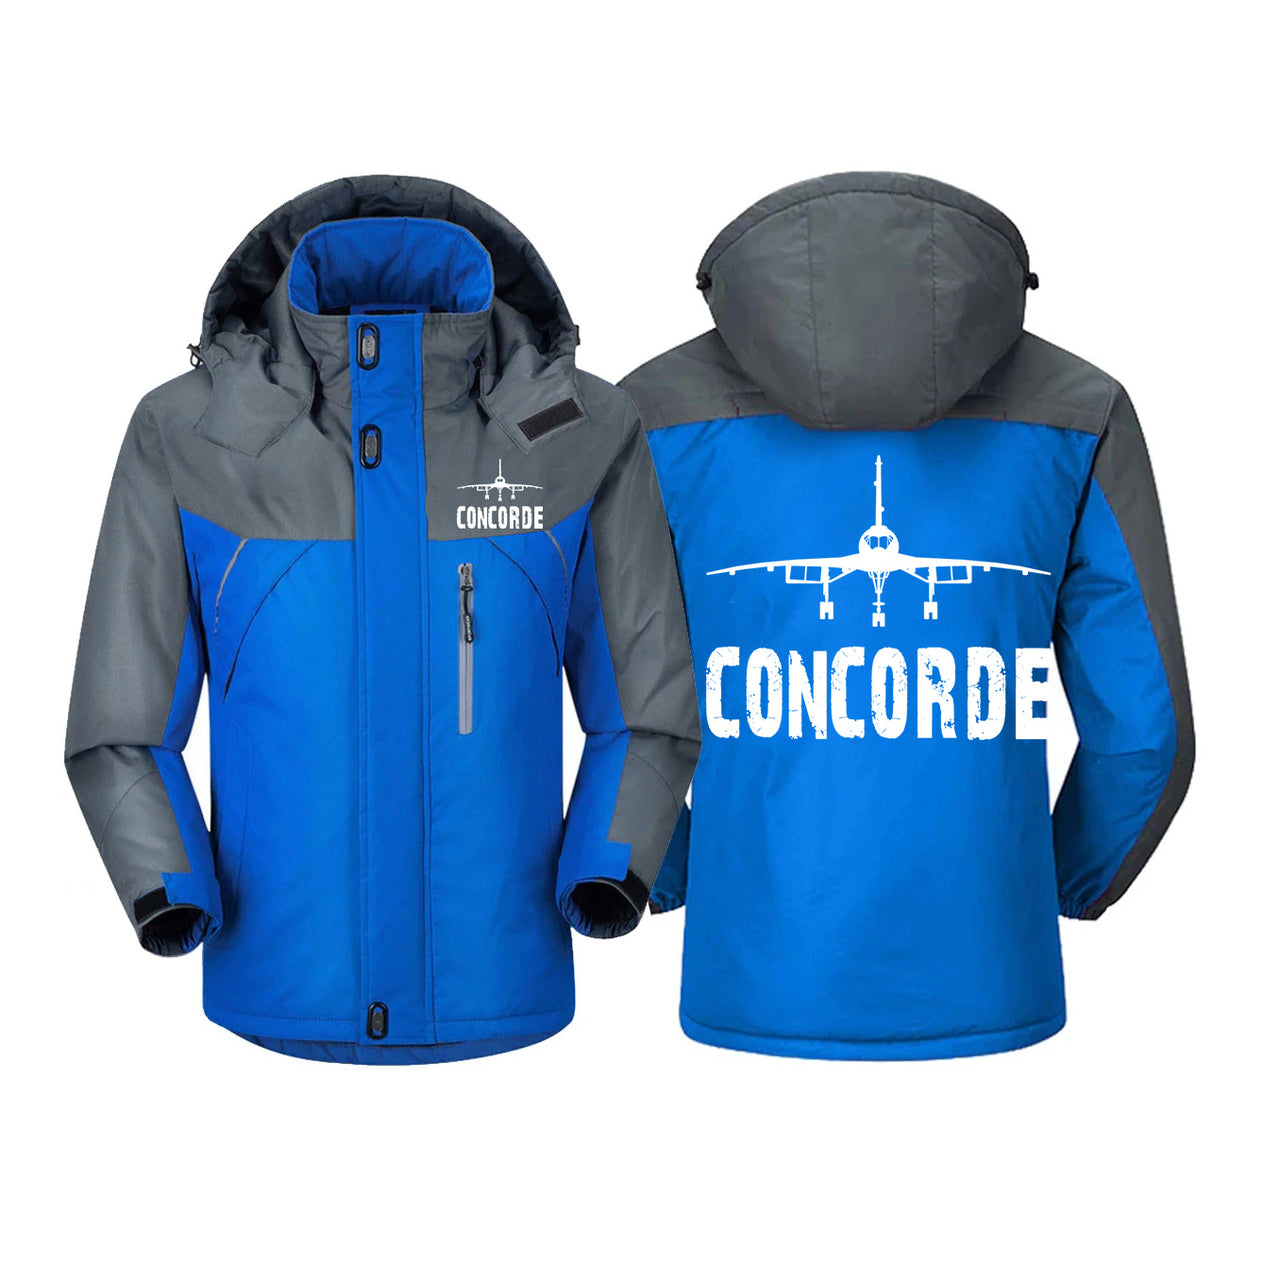 Concorde & Plane Designed Thick Winter Jackets